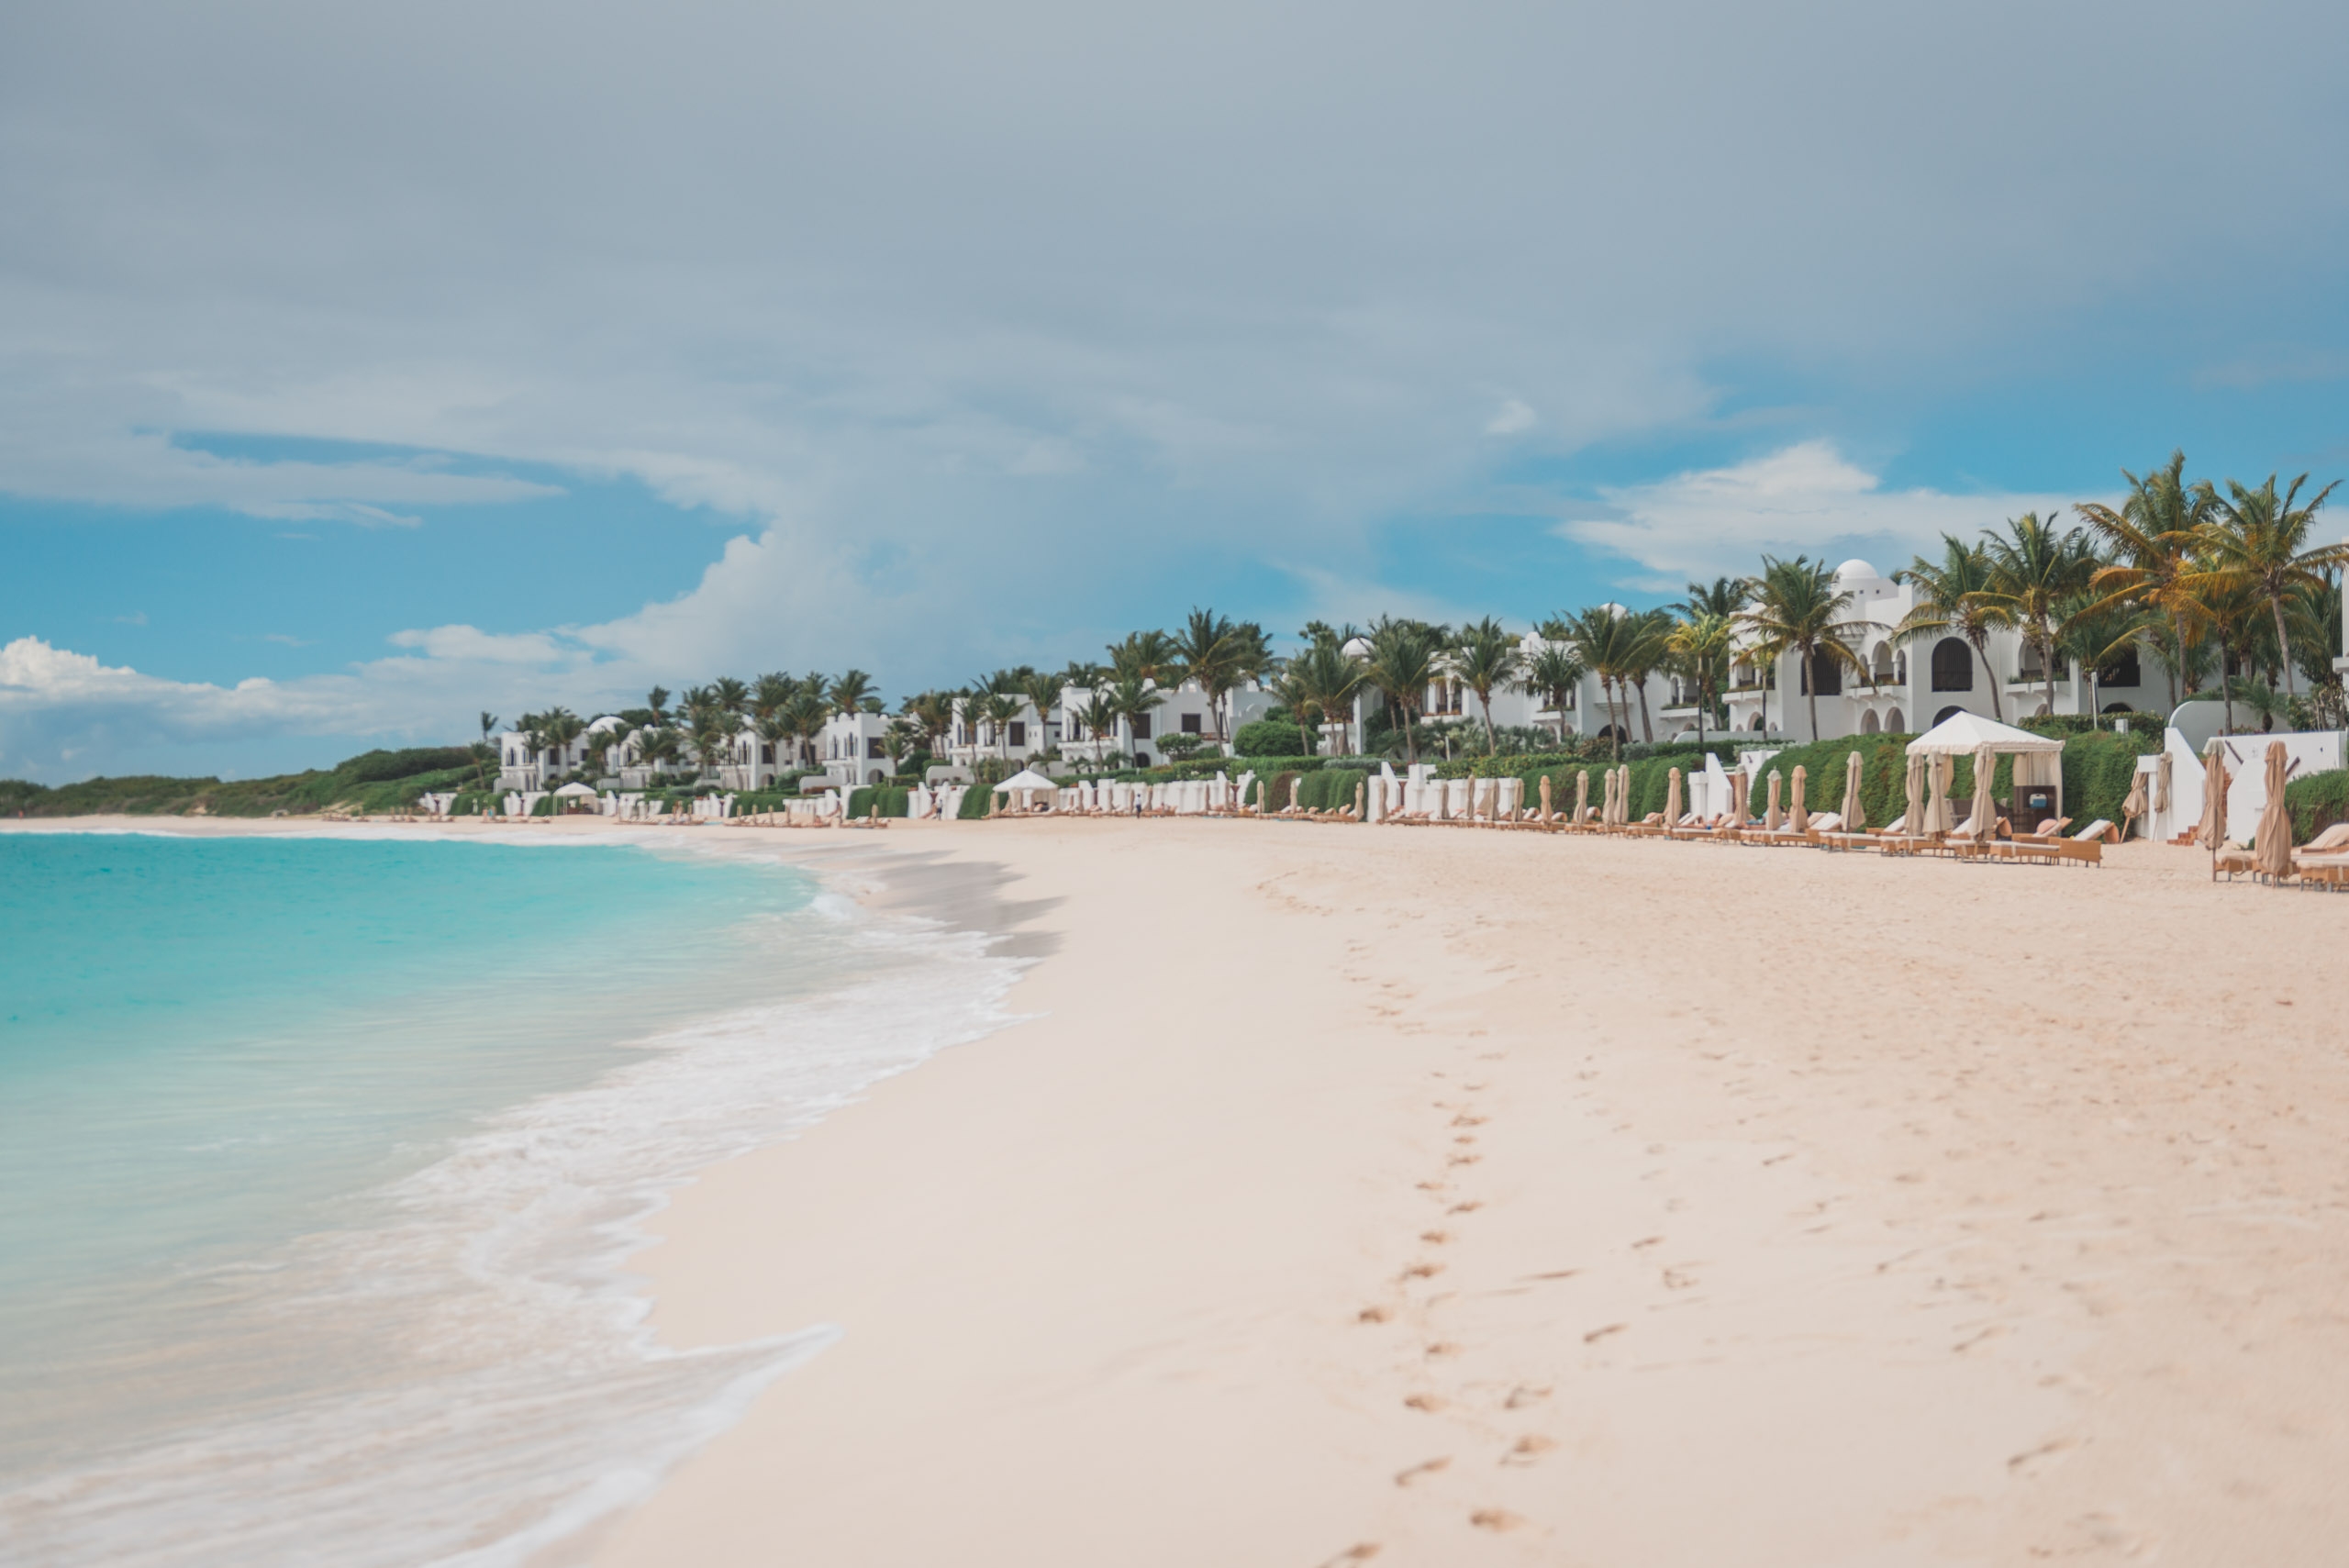 The Cap Juluca Resort in Anguilla